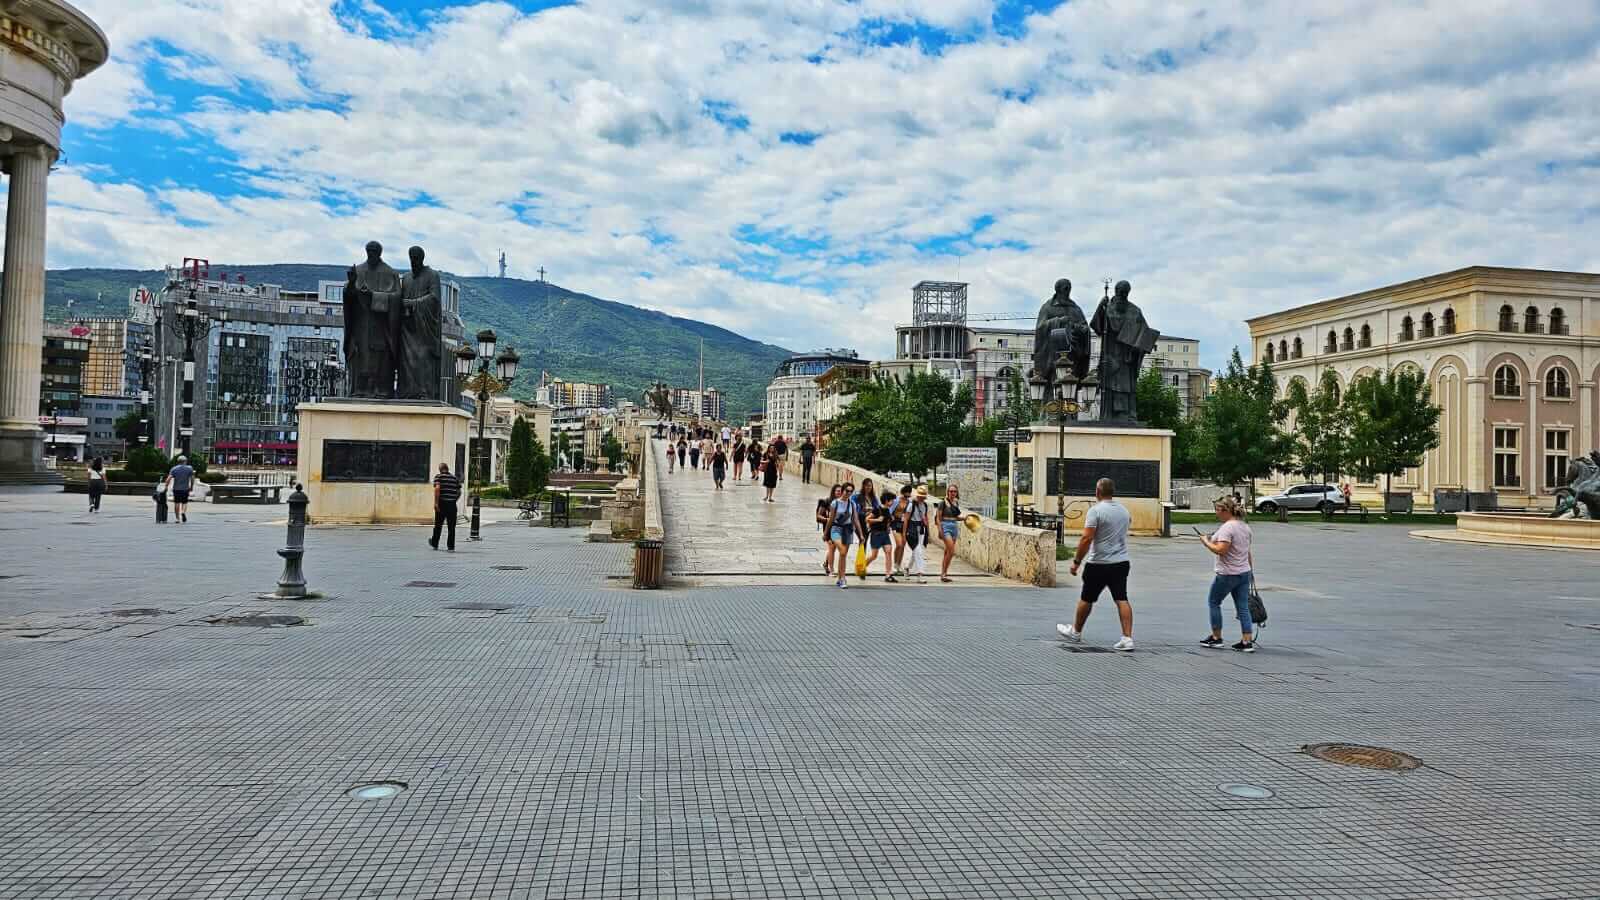 Stone Bridge Skopje - North Macedonia Travel Guide